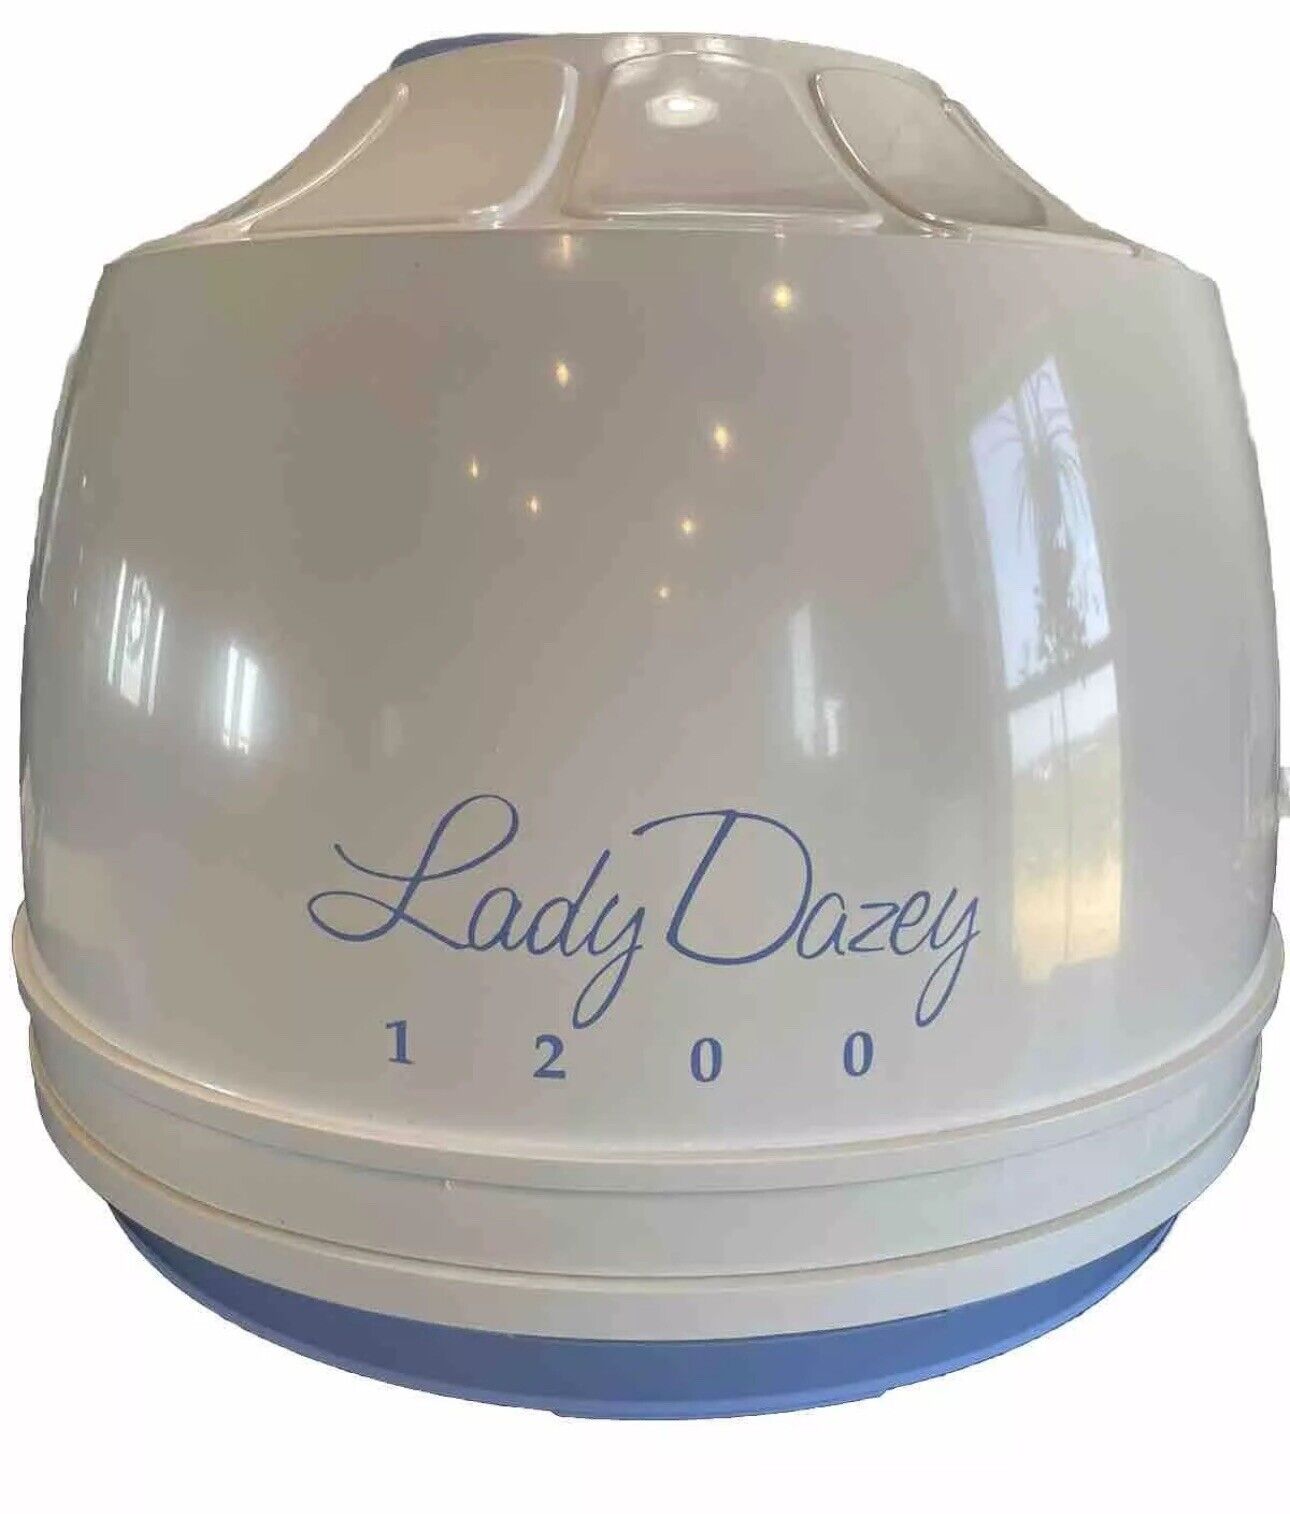 Hair Dryer Vintage Lady Dazey 1200 Tabletop Portable Salon Style Bonnet 4-Speed